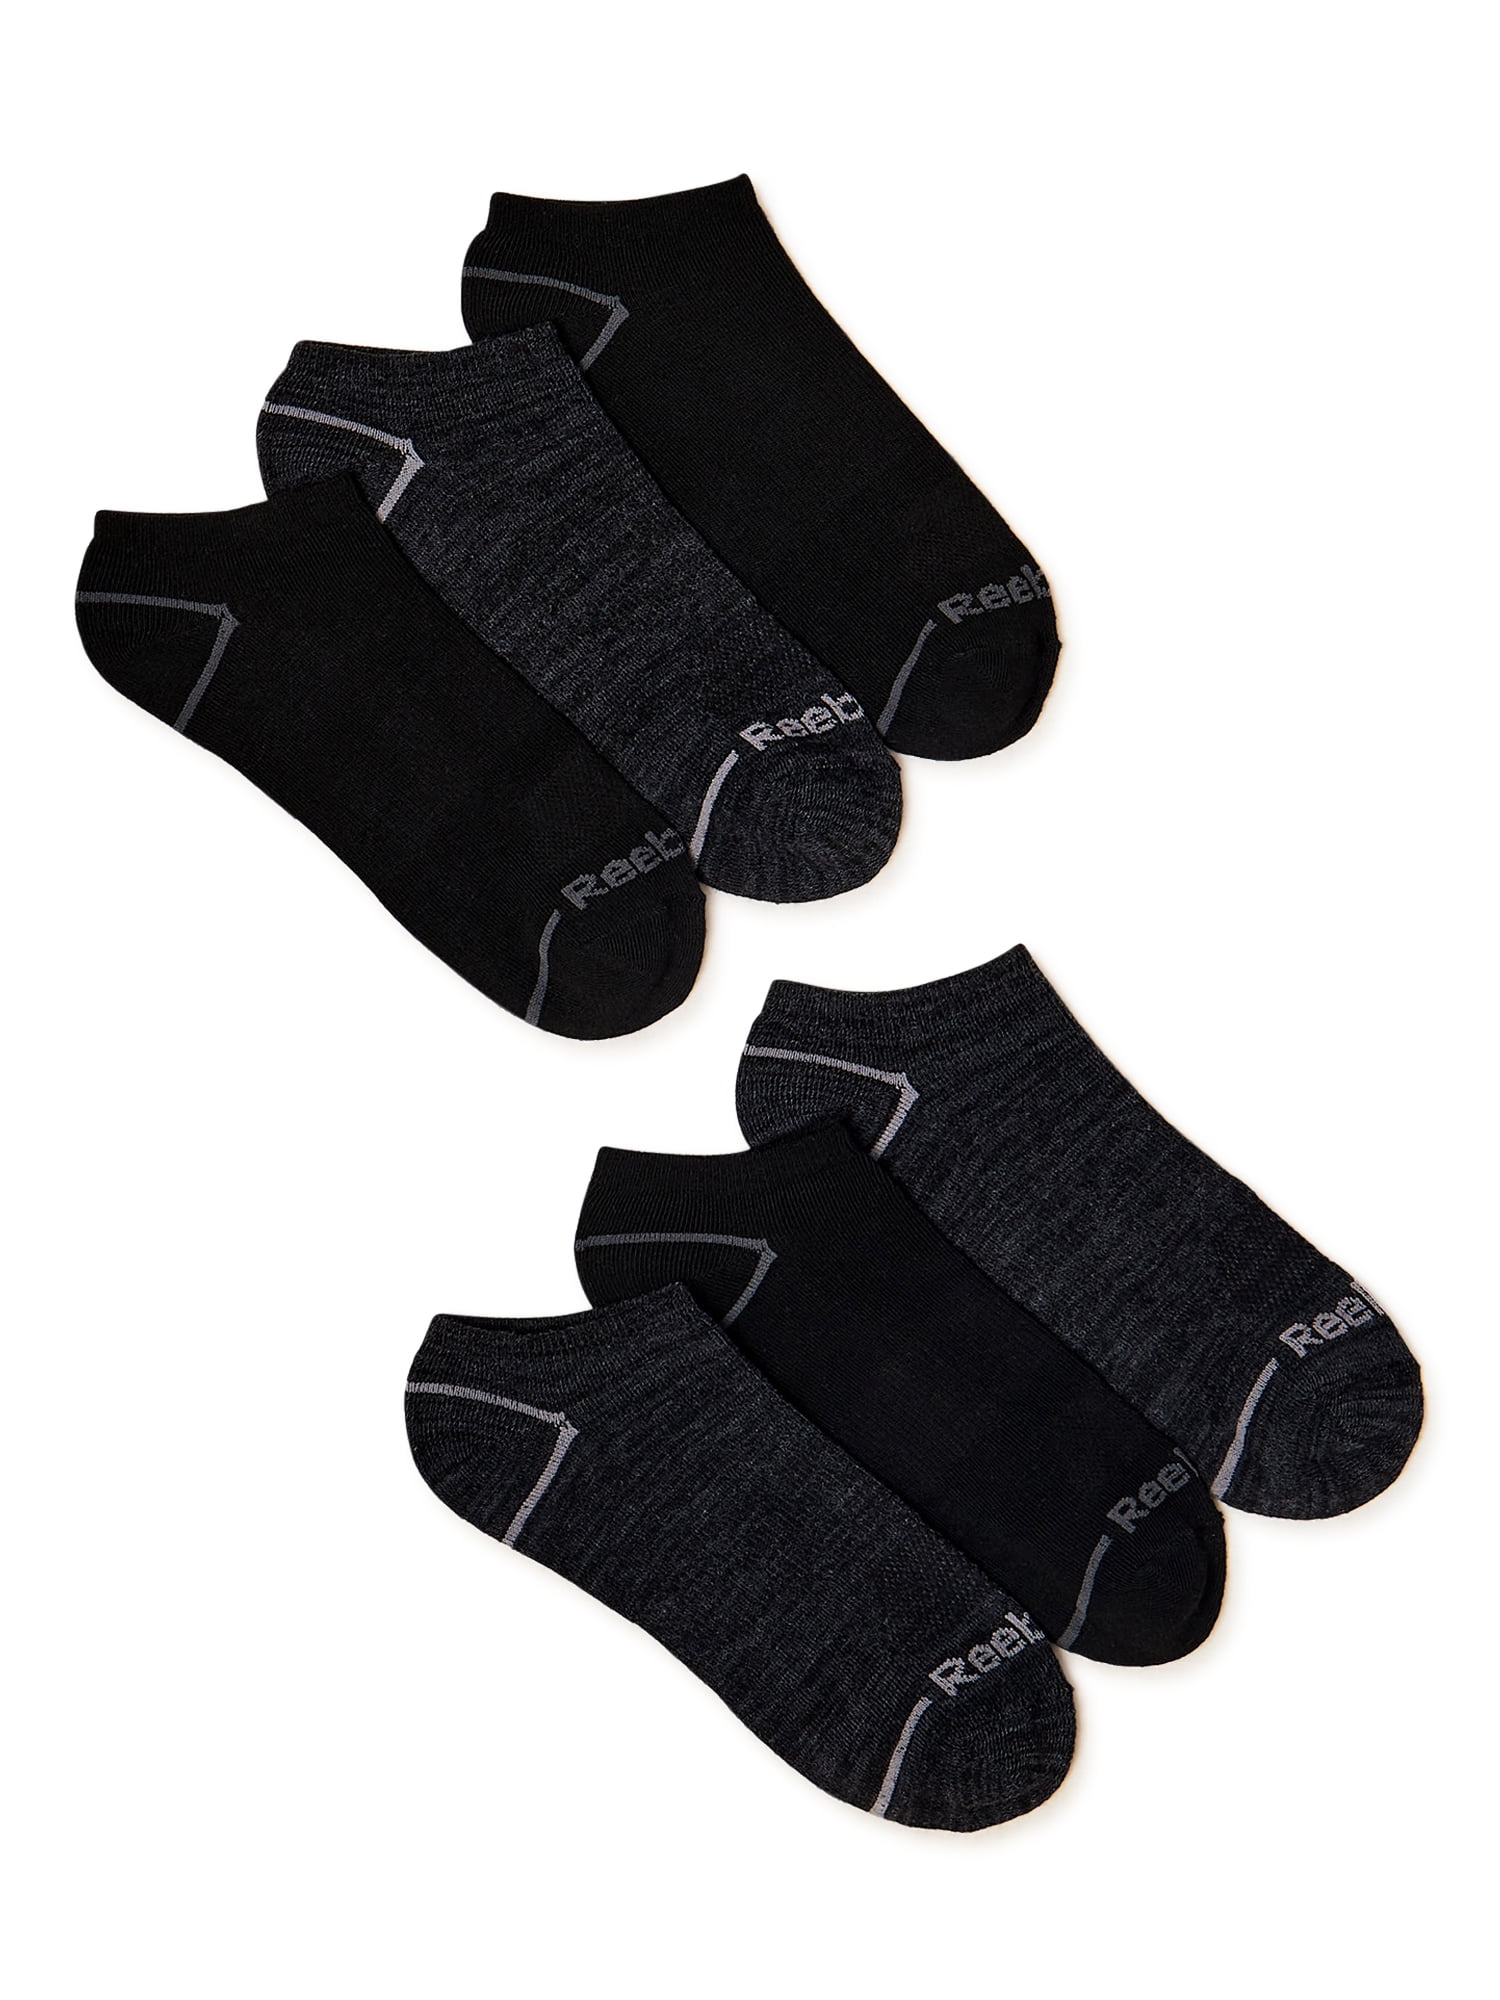 Reebok Men's Pro Series Lightweight Low Cut Socks, 6-Pack - Walmart.com